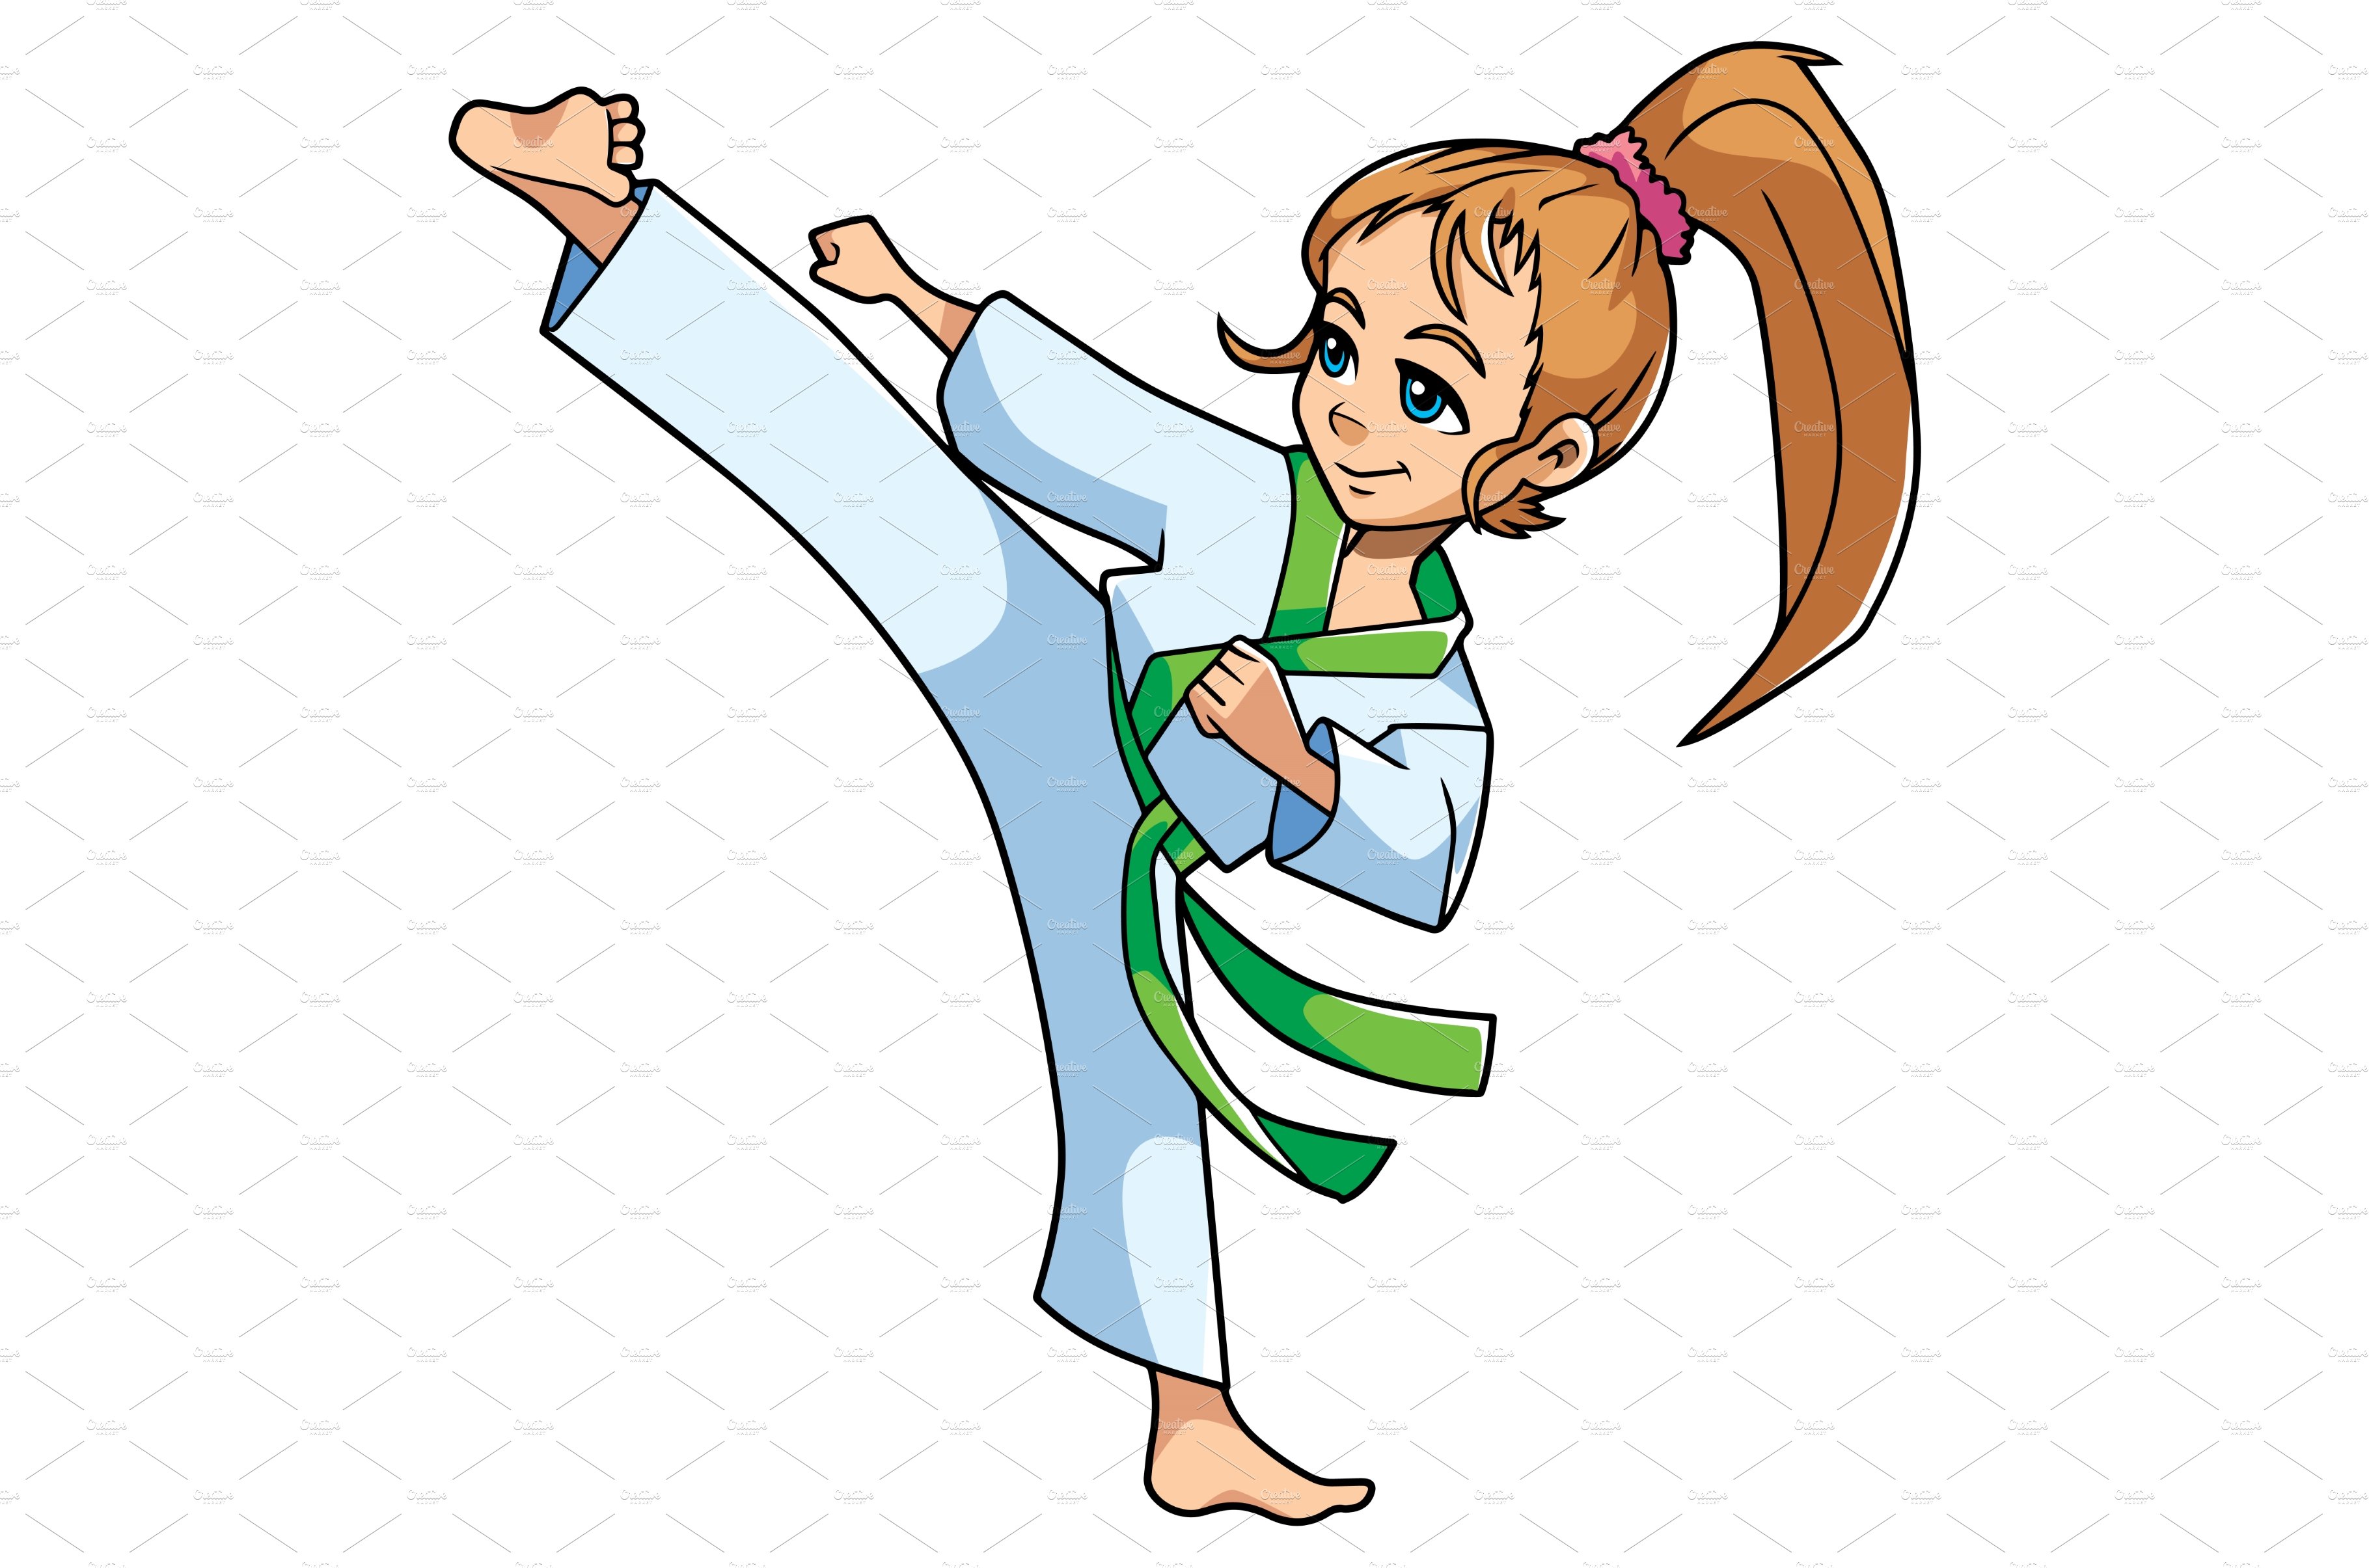 Karate Kick Girl cover image.